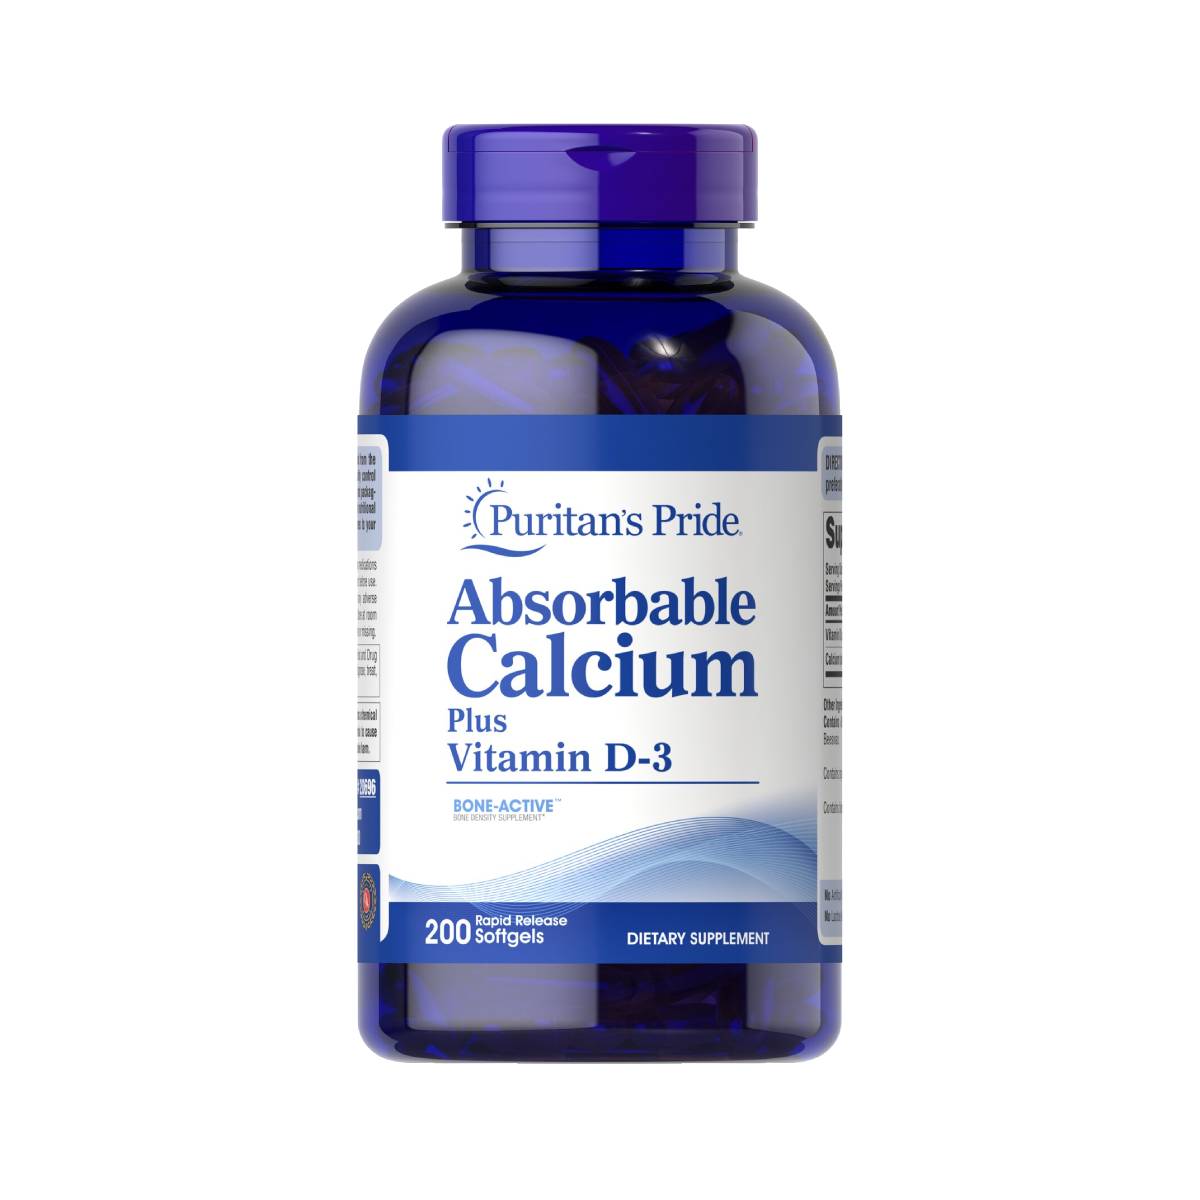 Puritan's Pride, Absorbable Calcium 1300 mg  Plus Vitamin D-3 25 mcg